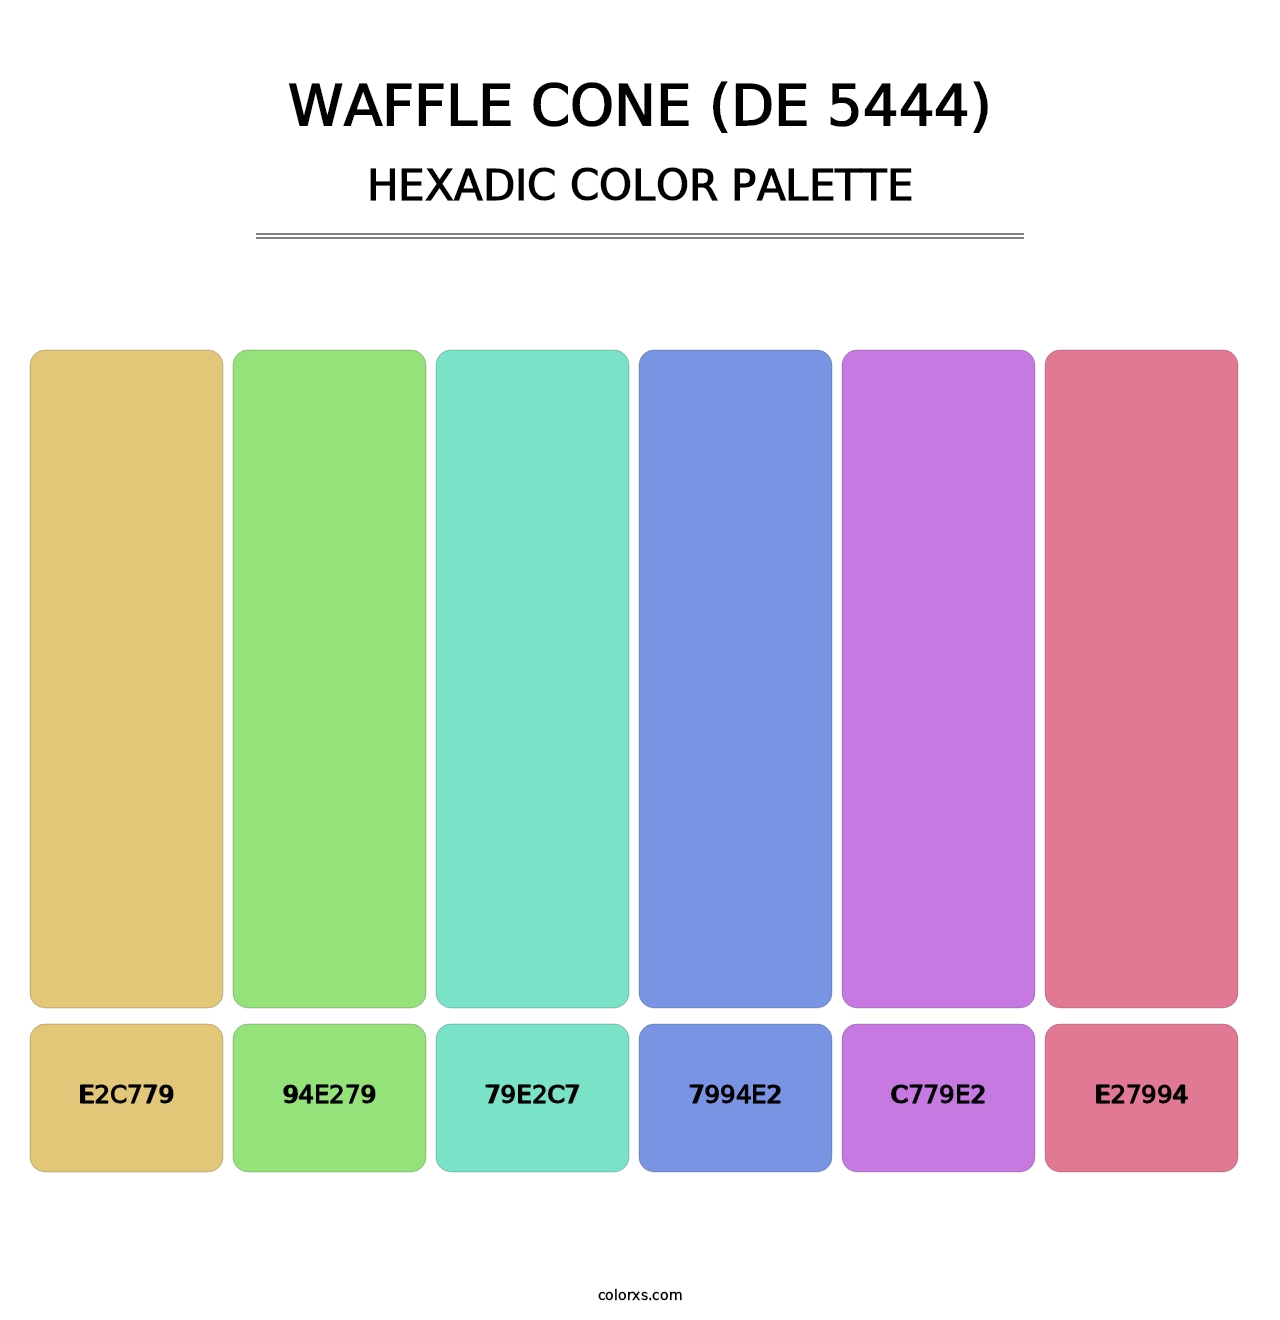 Waffle Cone (DE 5444) - Hexadic Color Palette